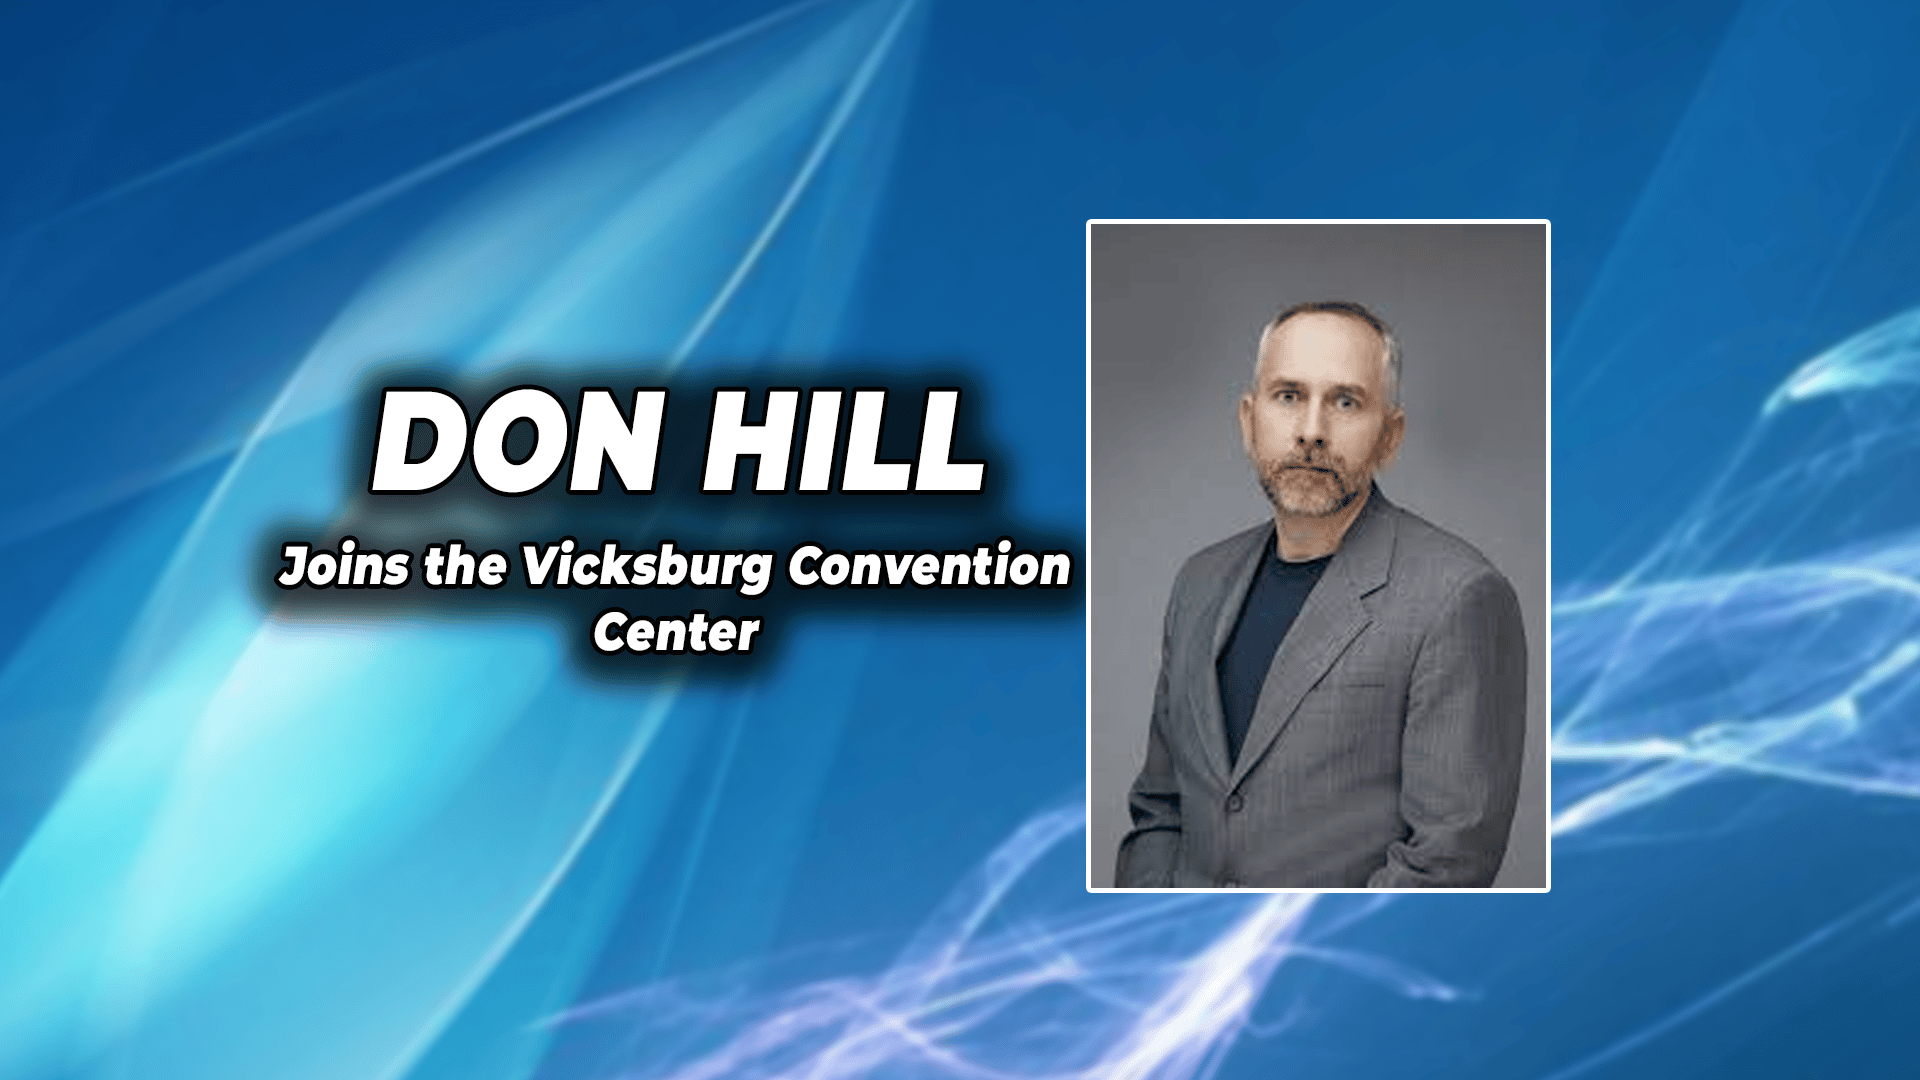 vicksburg convention center don hill sales manager